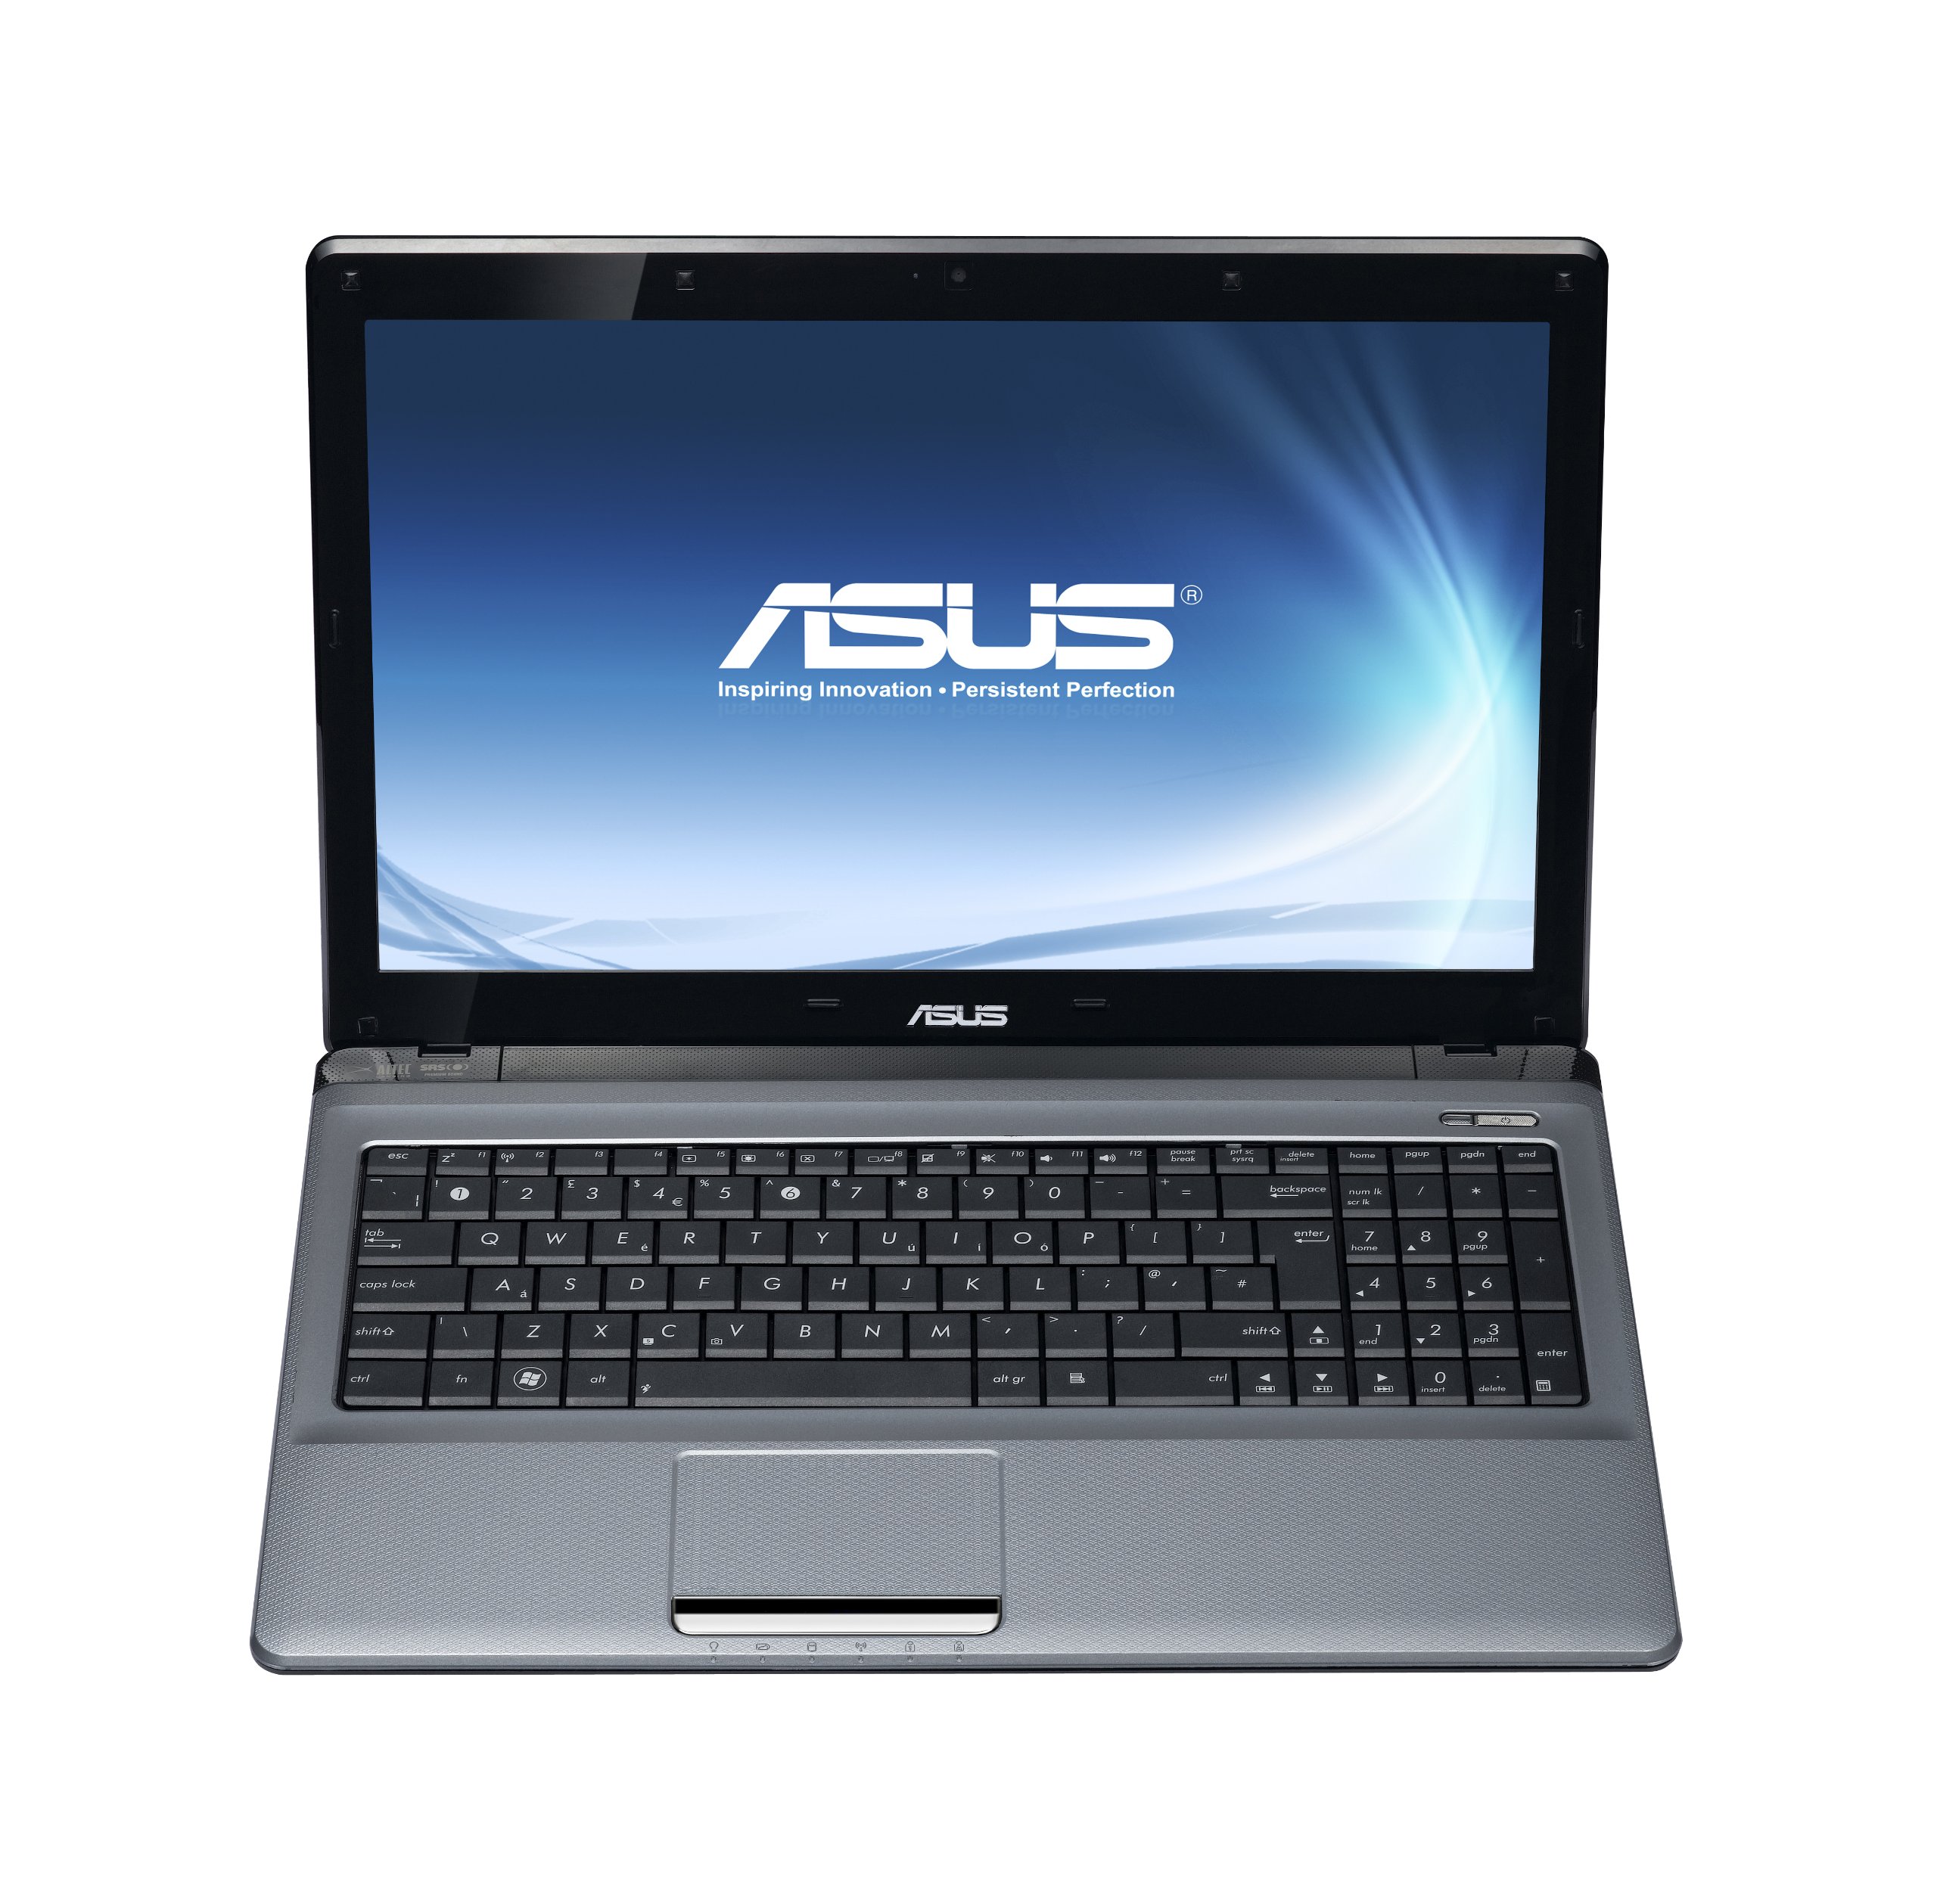 Asus A52JT Notebook